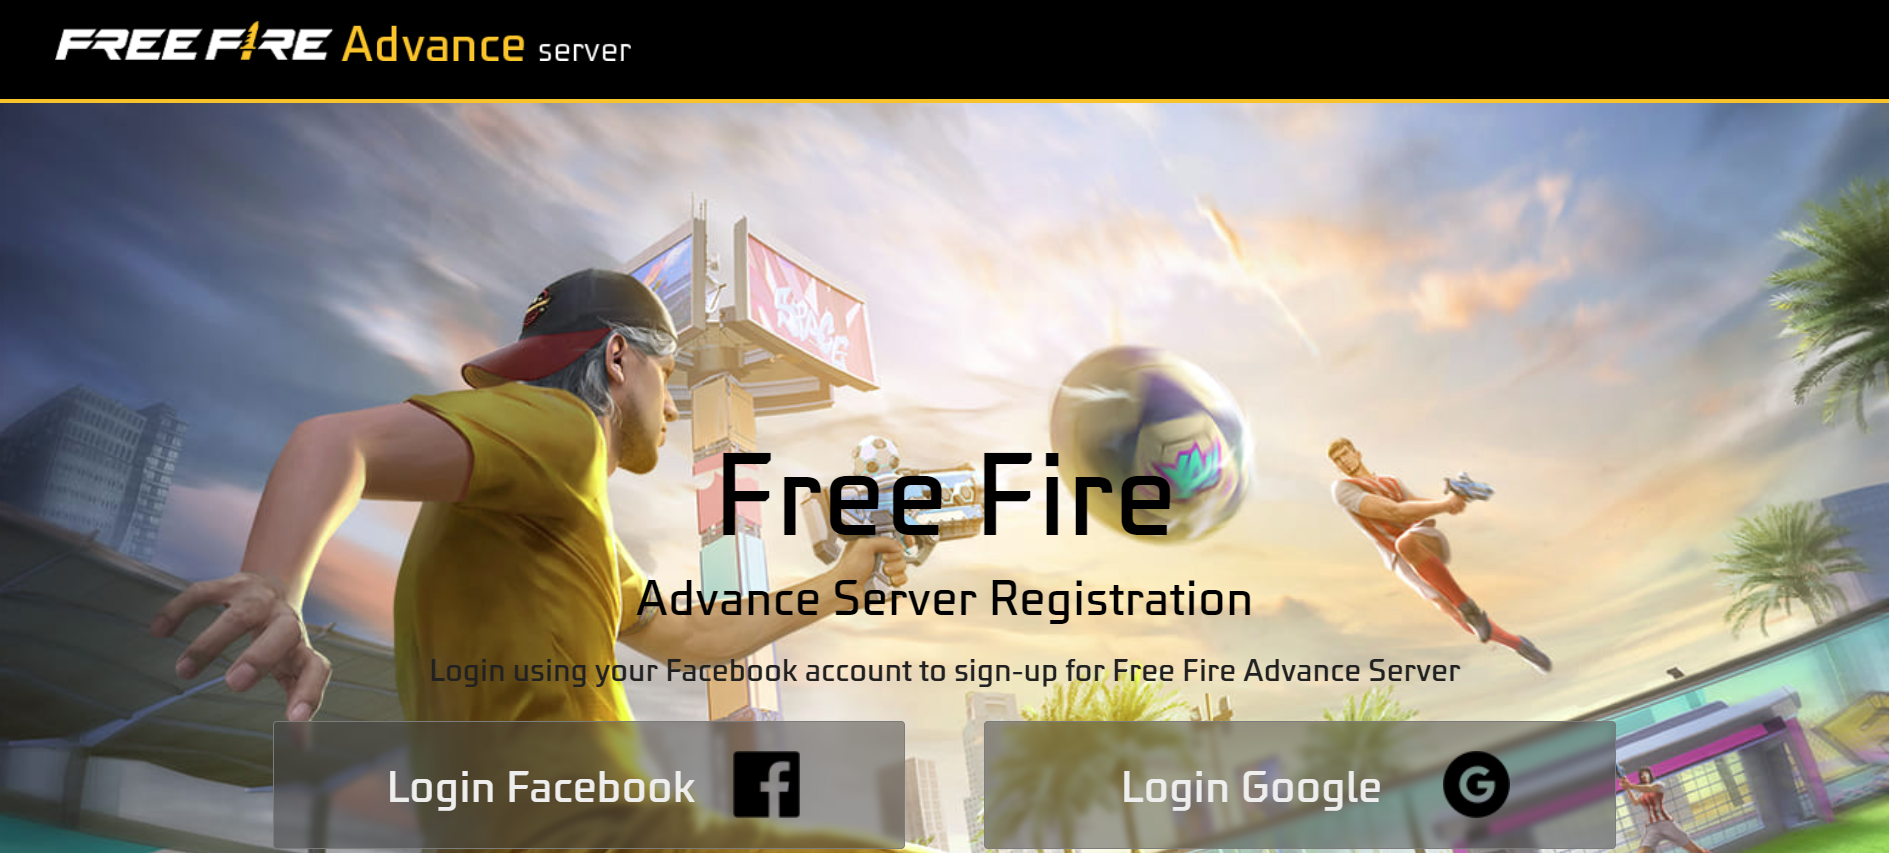 Free Fire Advance Server Page